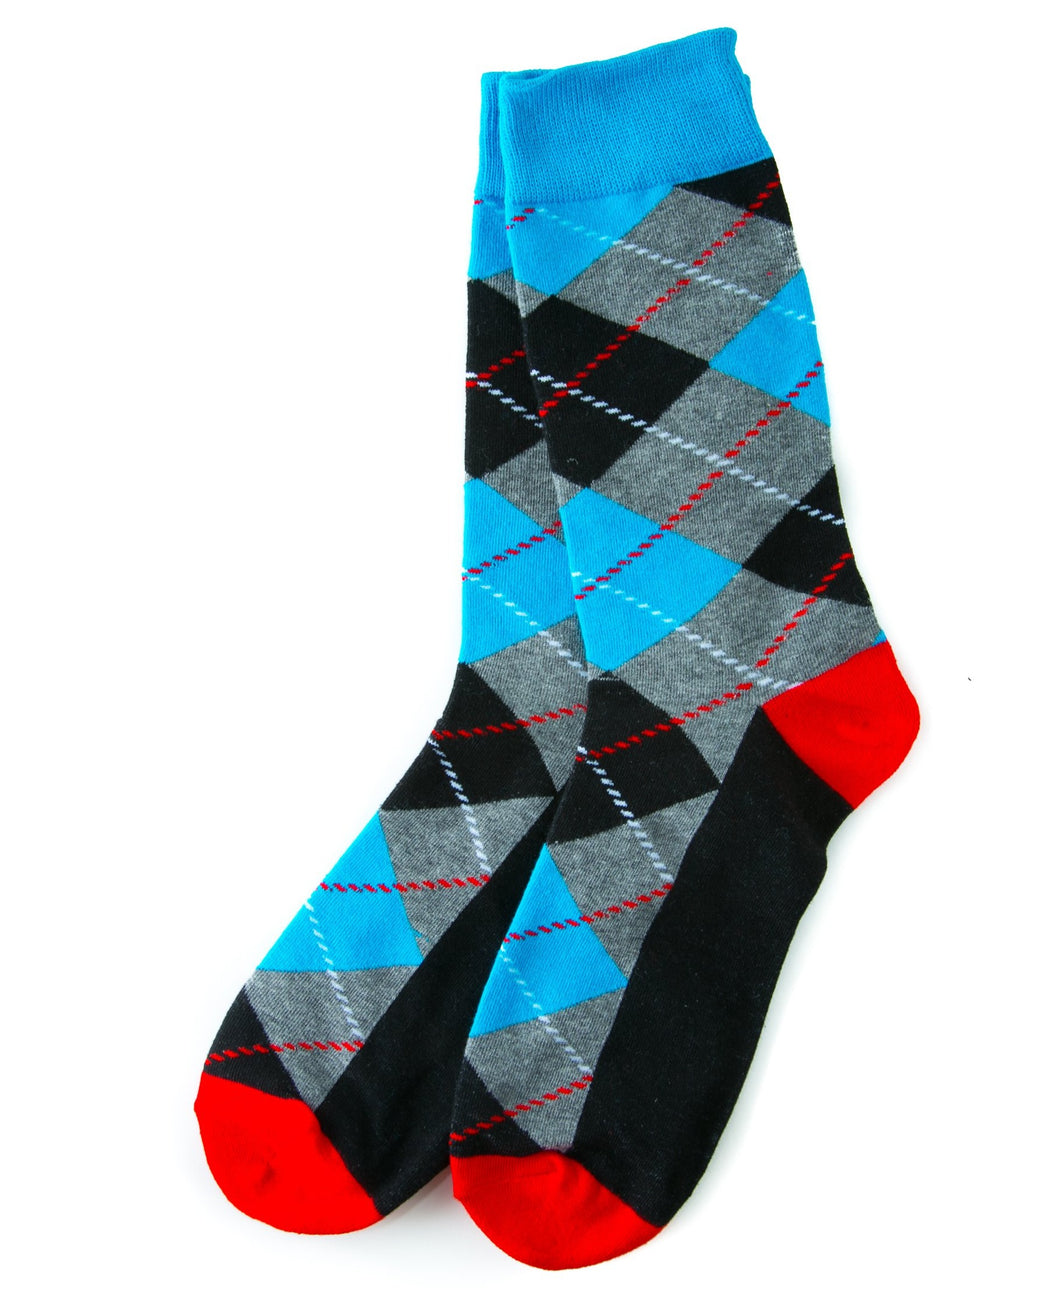 blue grey argyle socks